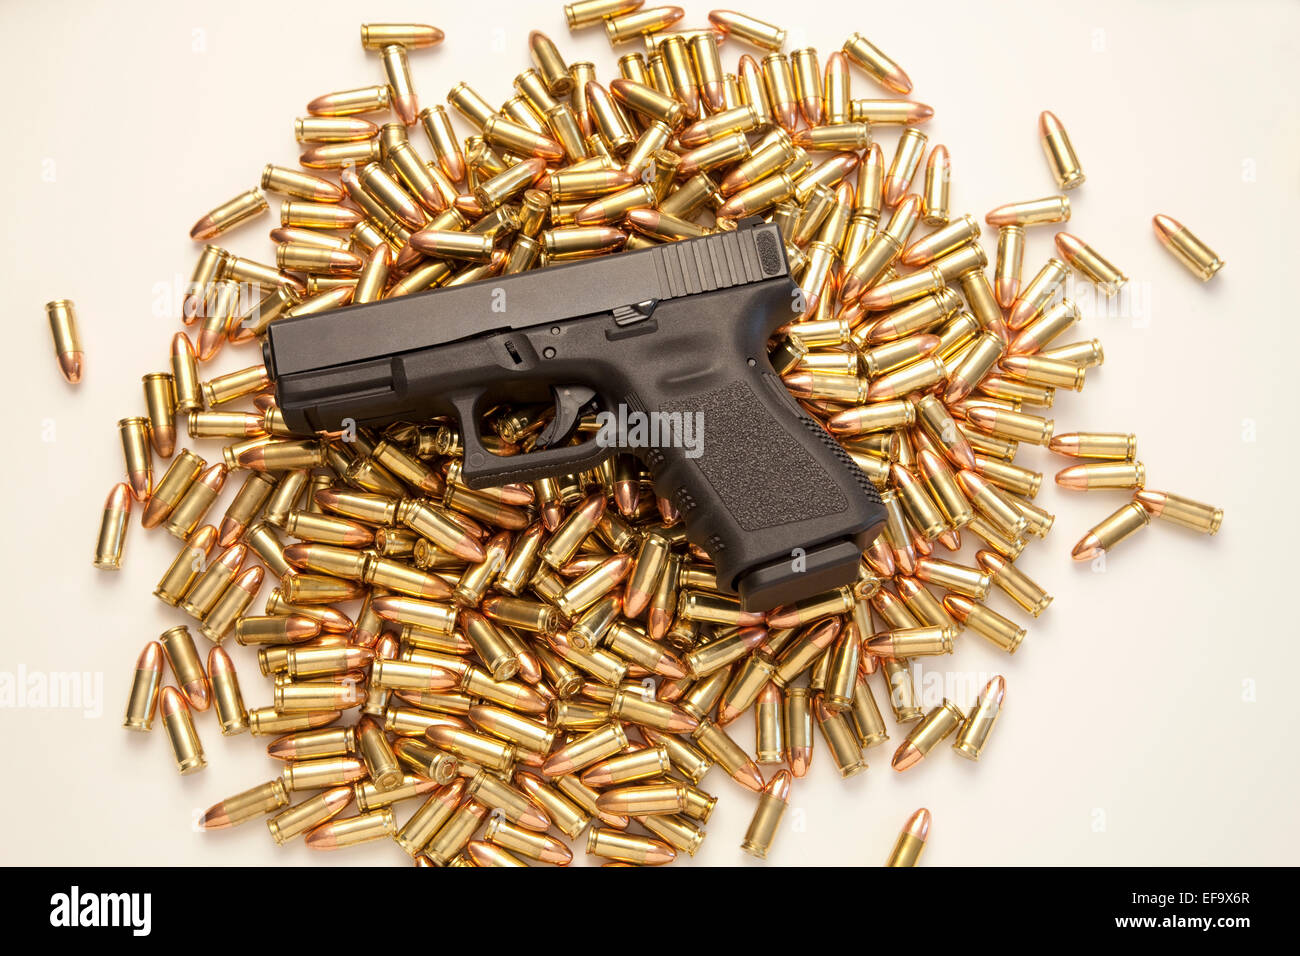 9mm Glock 19 handgun resting on pile of live ammunition on white background Stock Photo